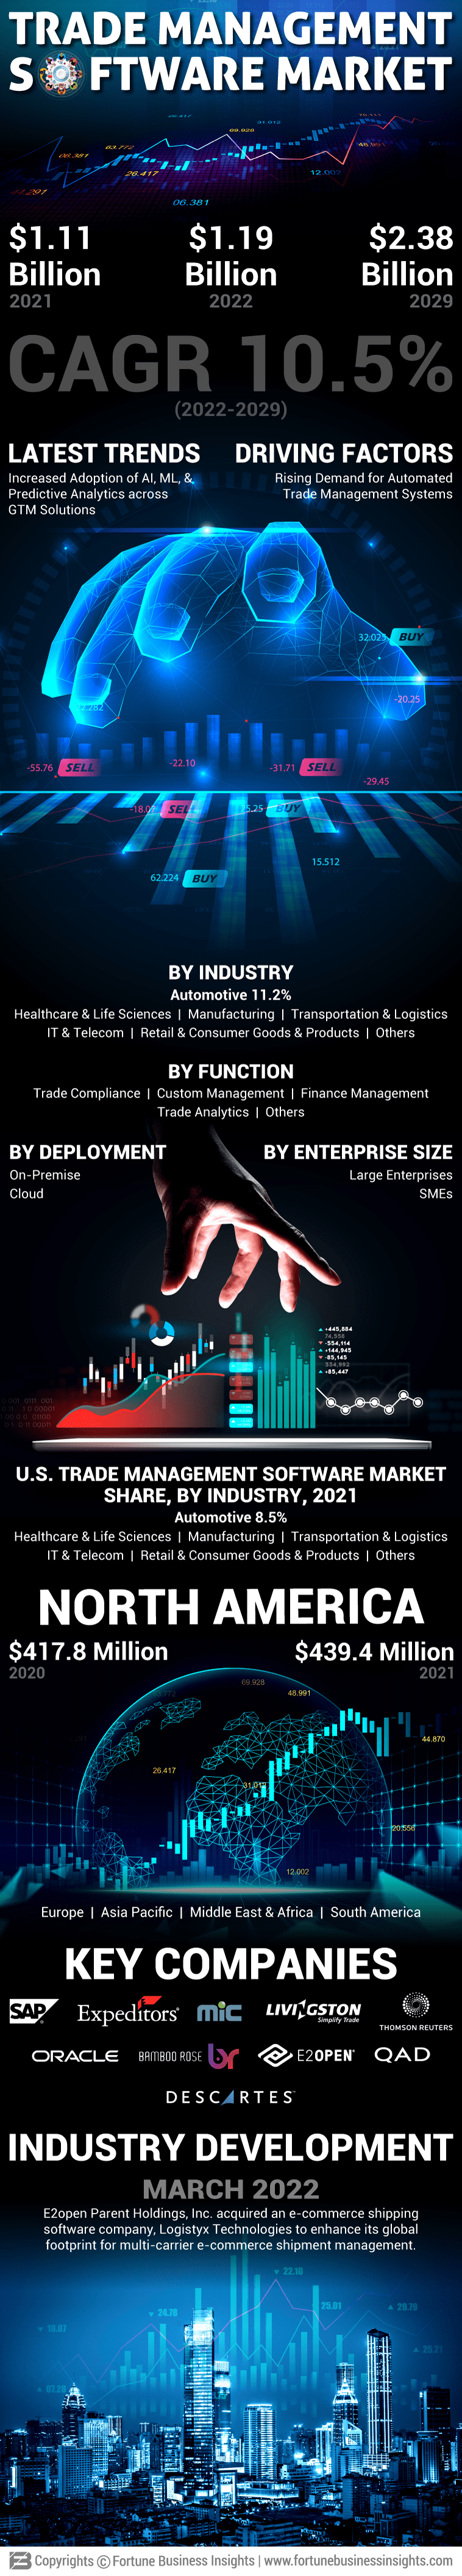 Trade Management Software Market